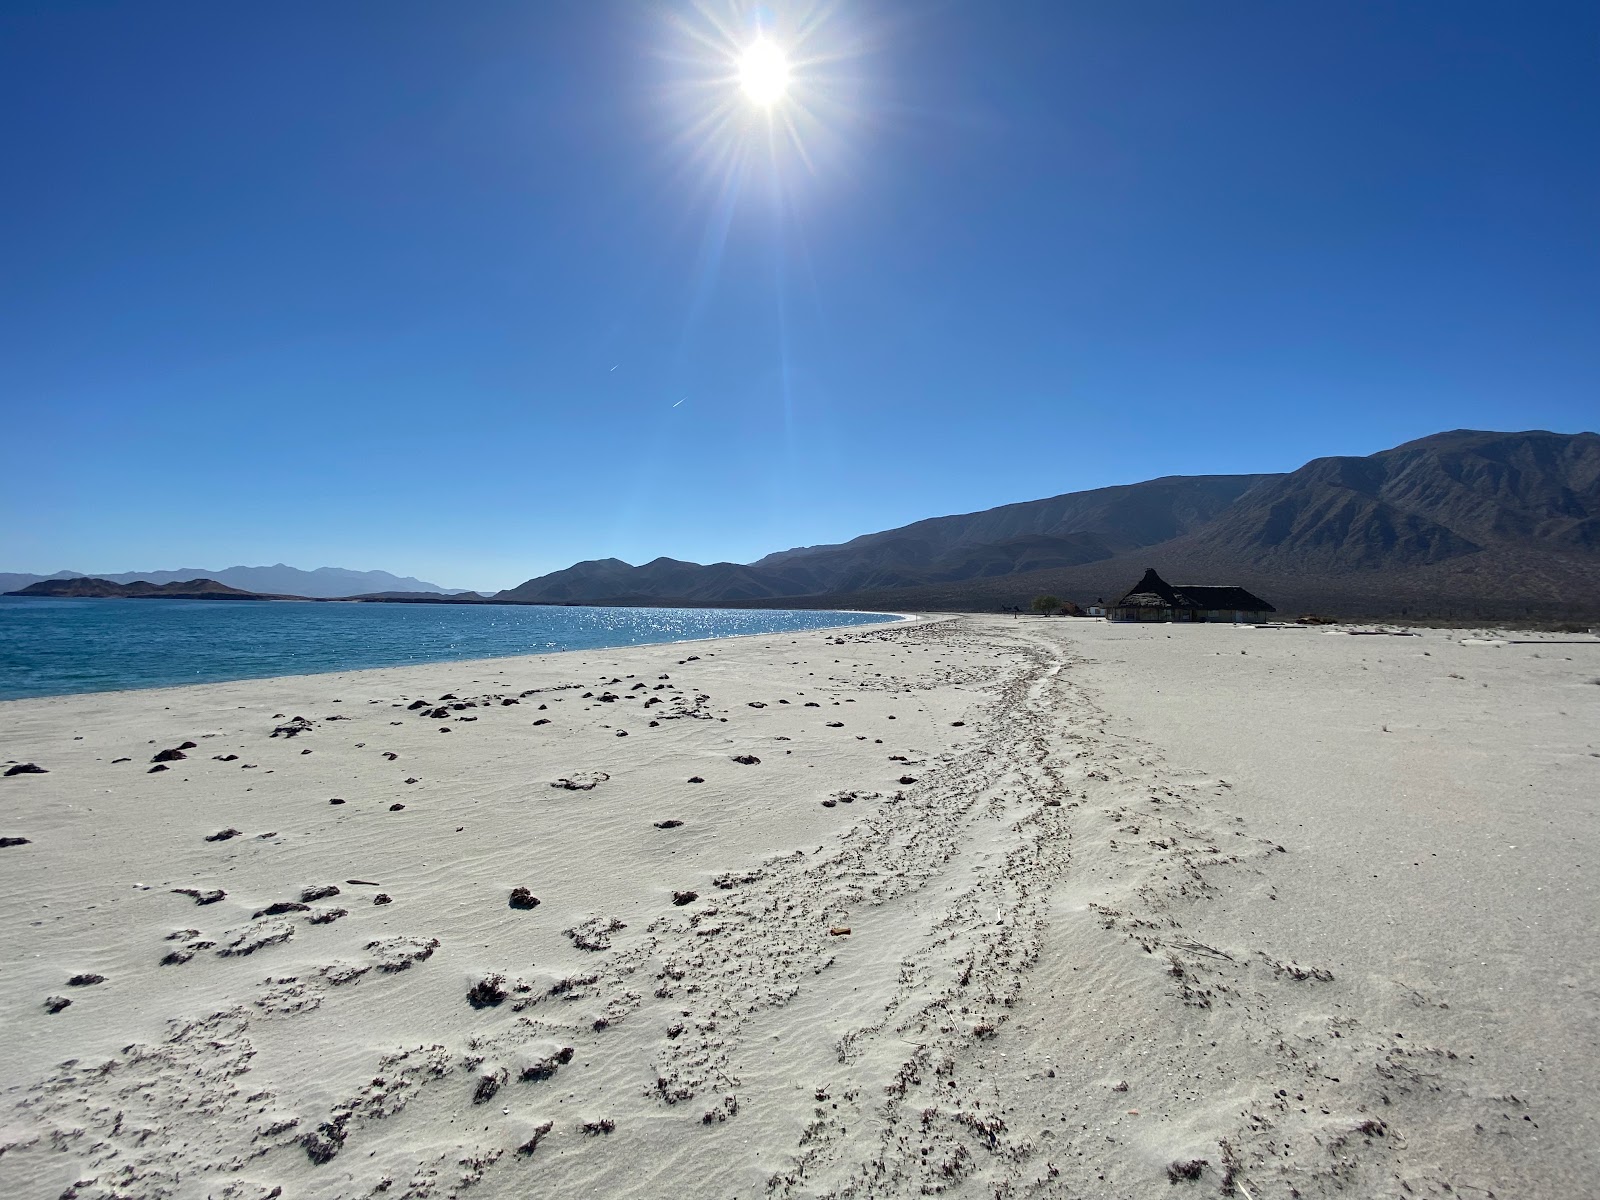 Foto di Playa El Pescador con una superficie del sabbia fine e luminosa